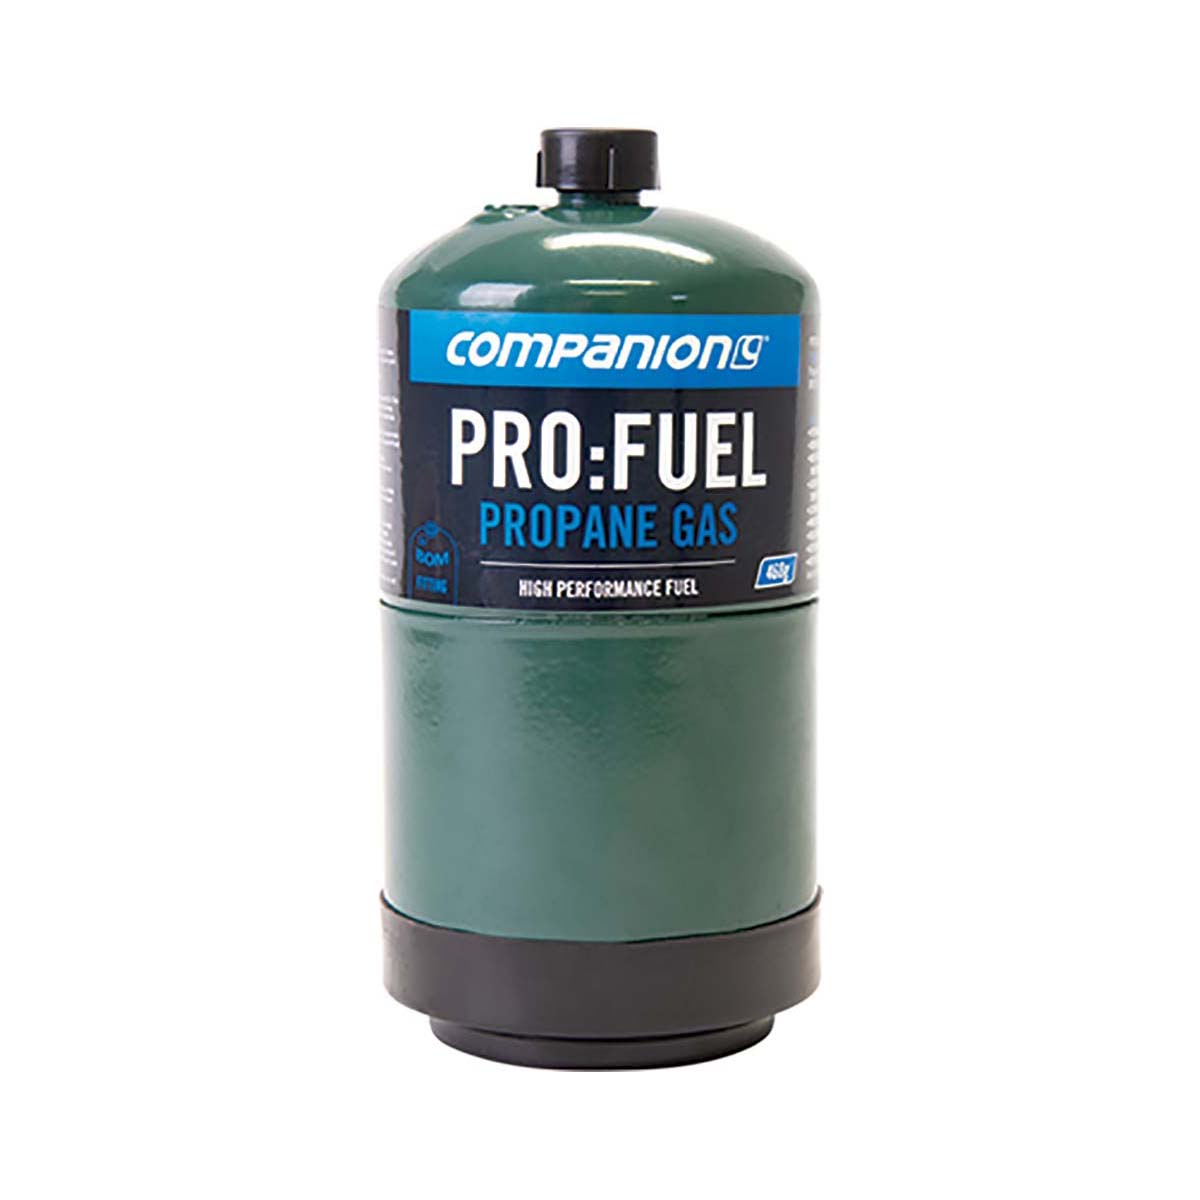 Companion Propane Gas Fuel 468g